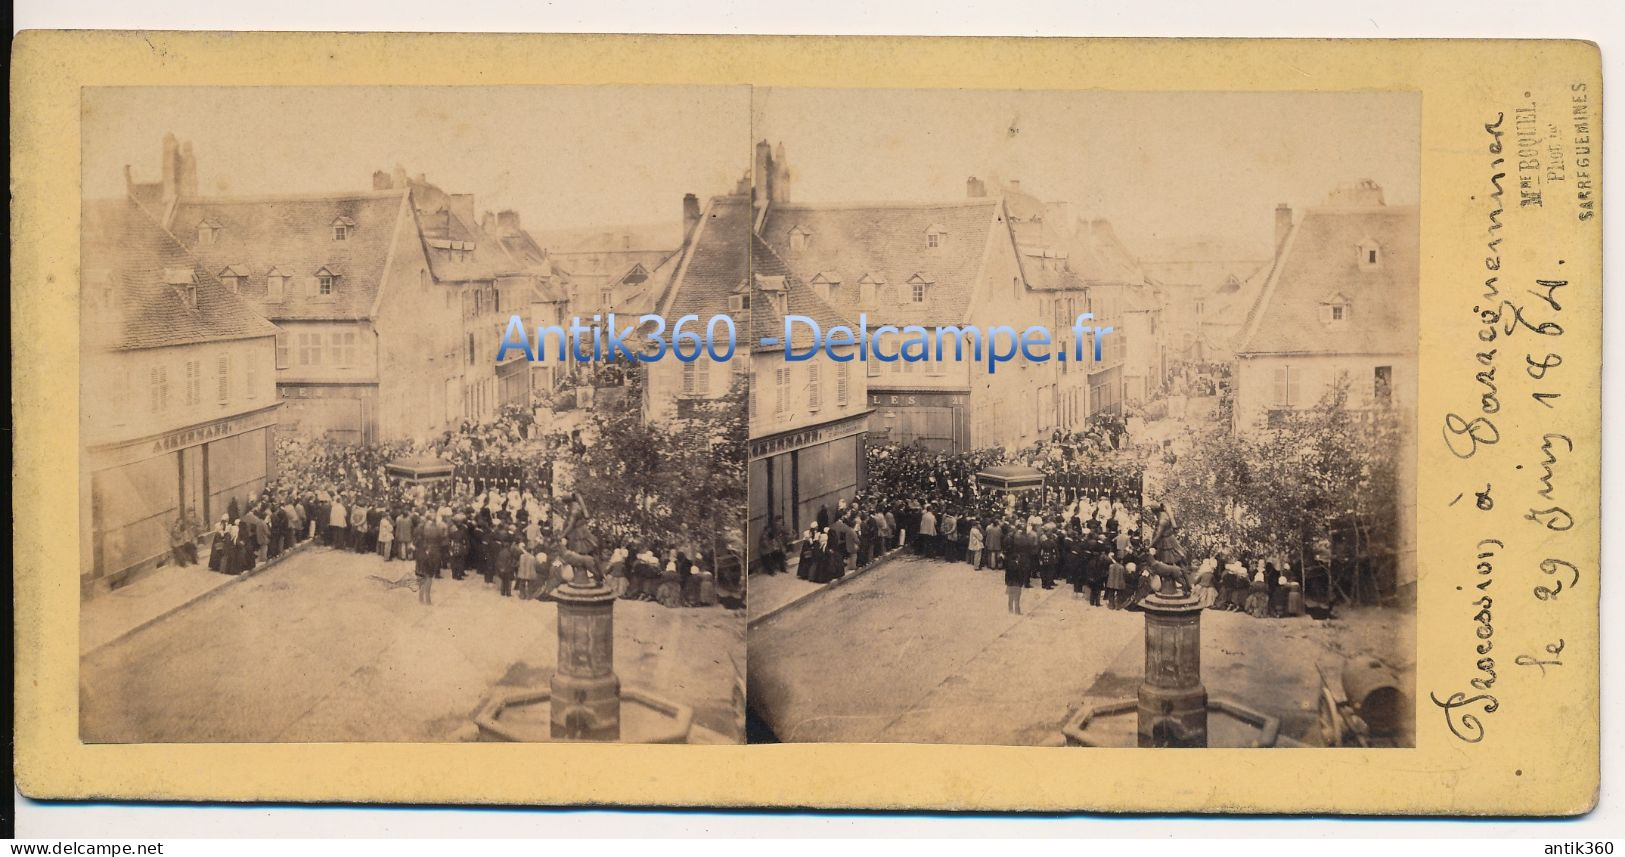 Photographie Ancienne Vue Stéréoscopique Circa 1860 SARREGUEMINES Procession 29 Juin 1864 - Stereoscopic